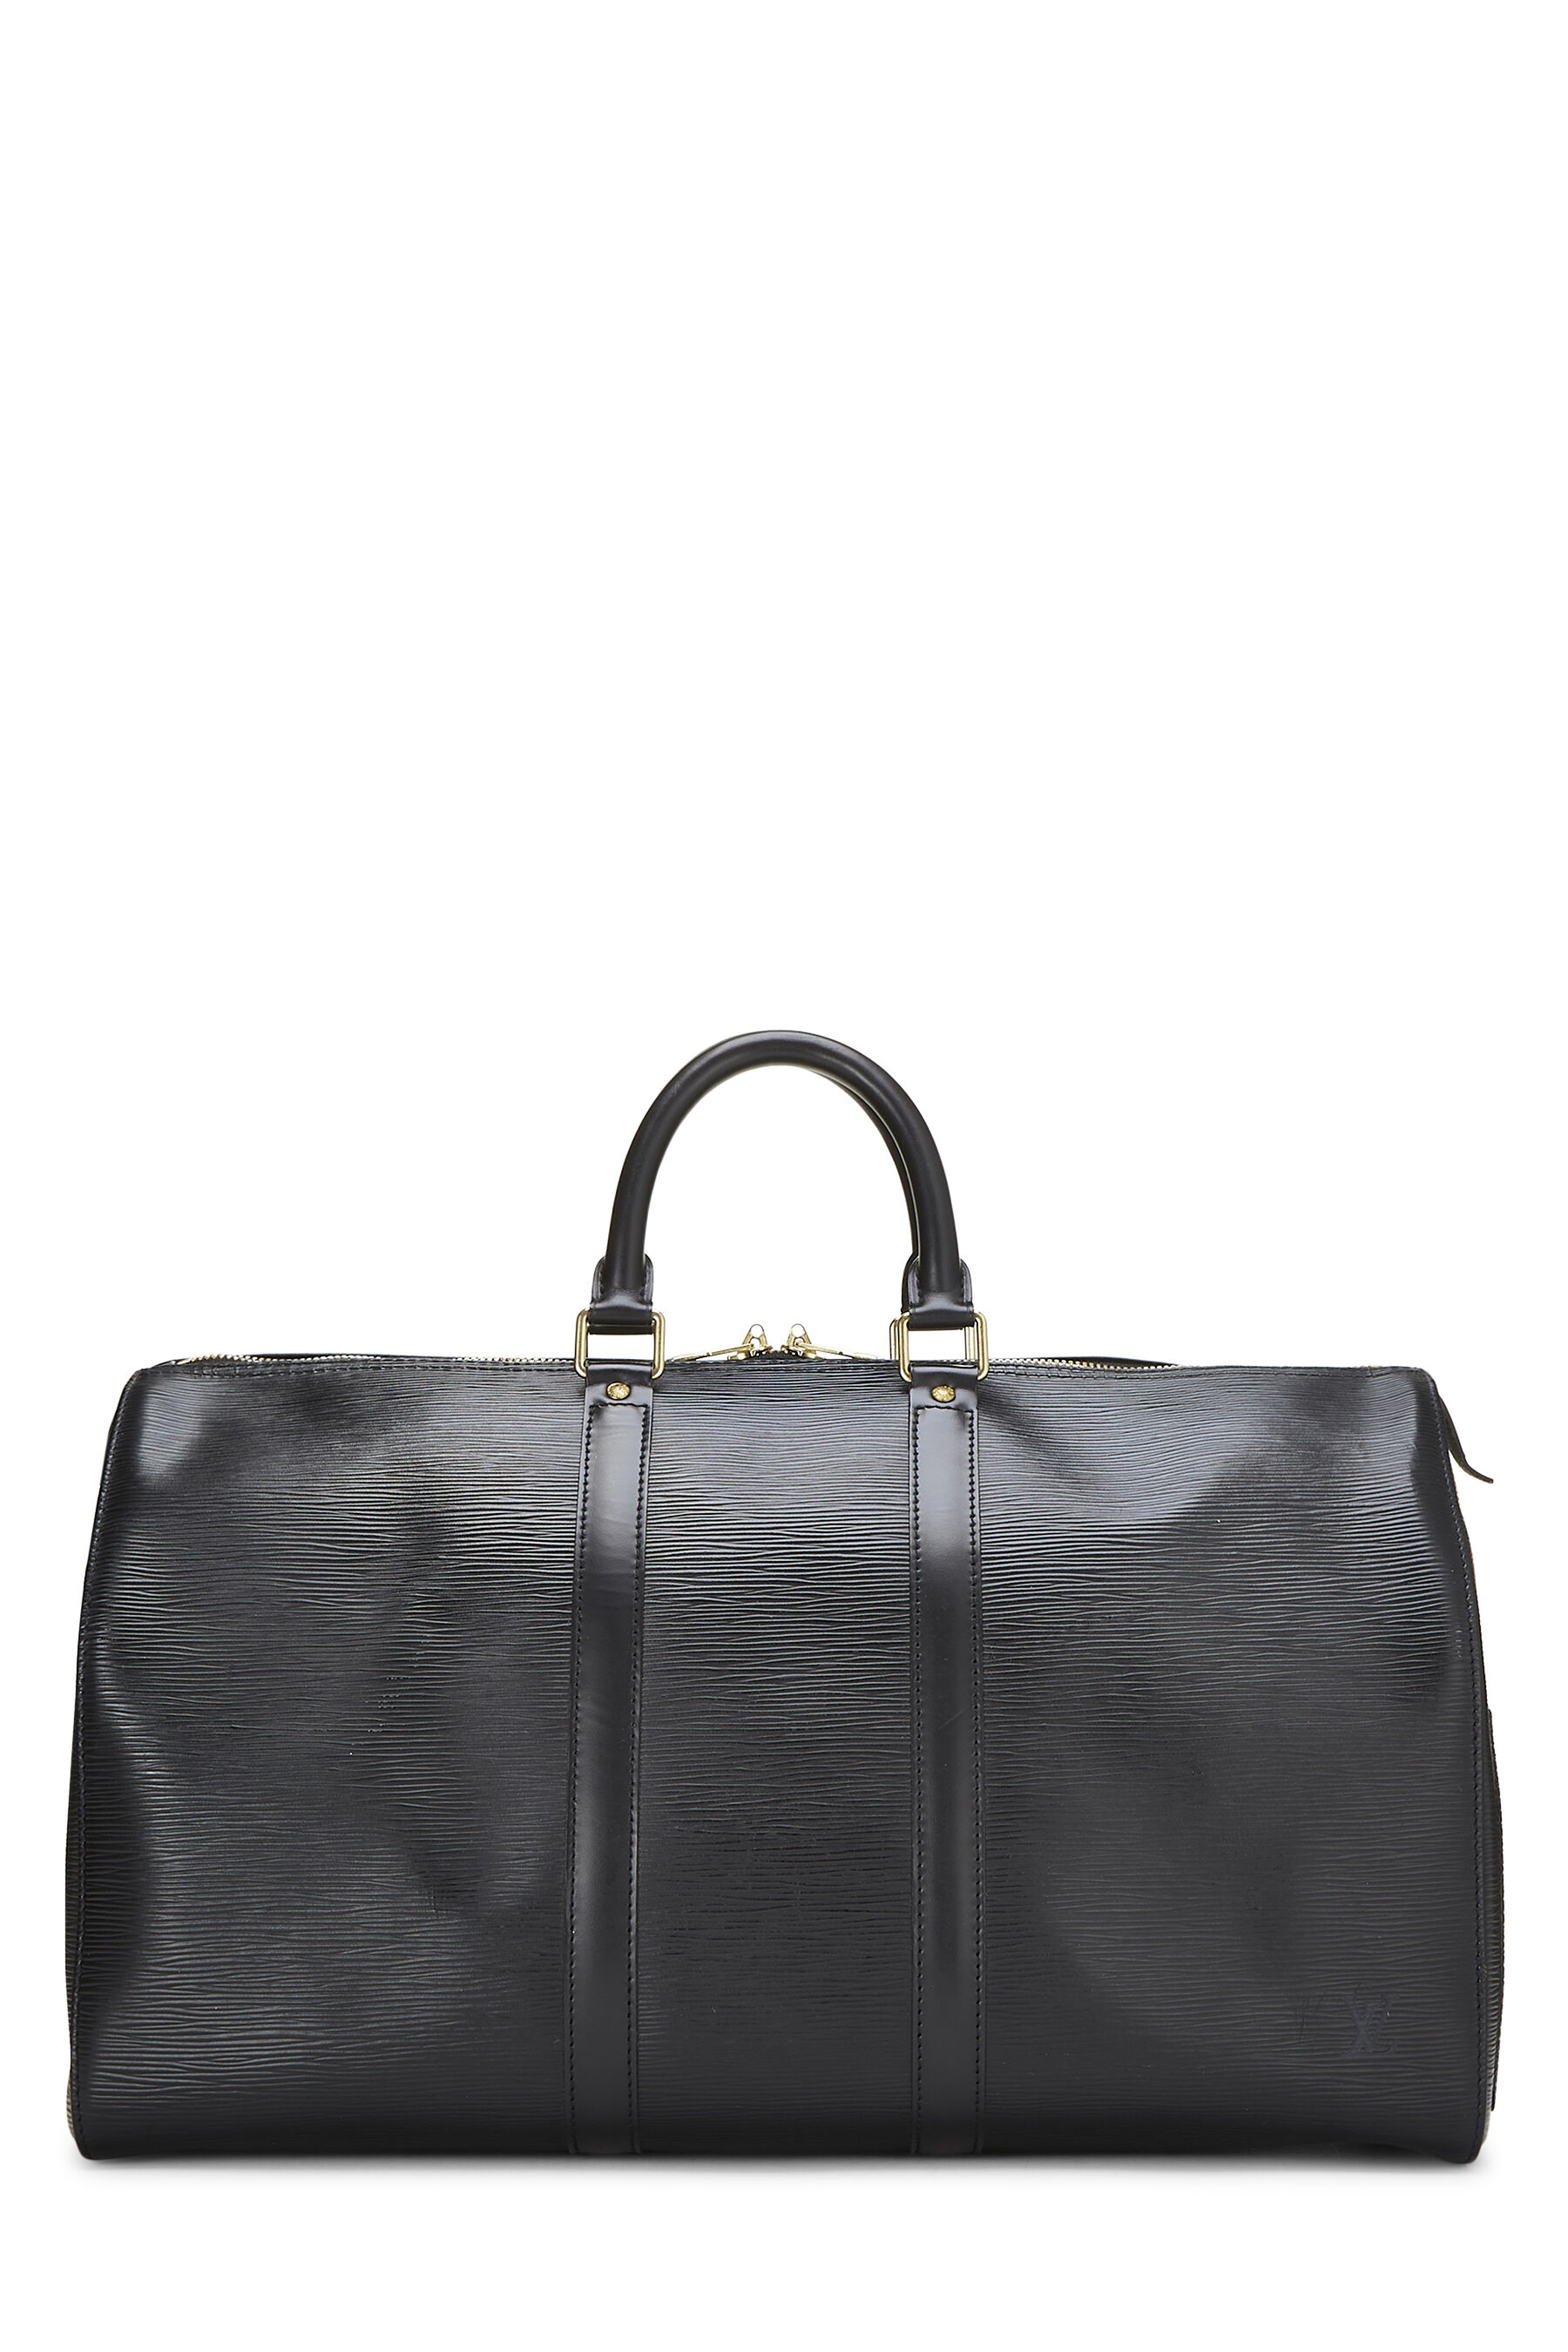 Louis Vuitton Keepall 50 Travel Bag in Black EPI Leather